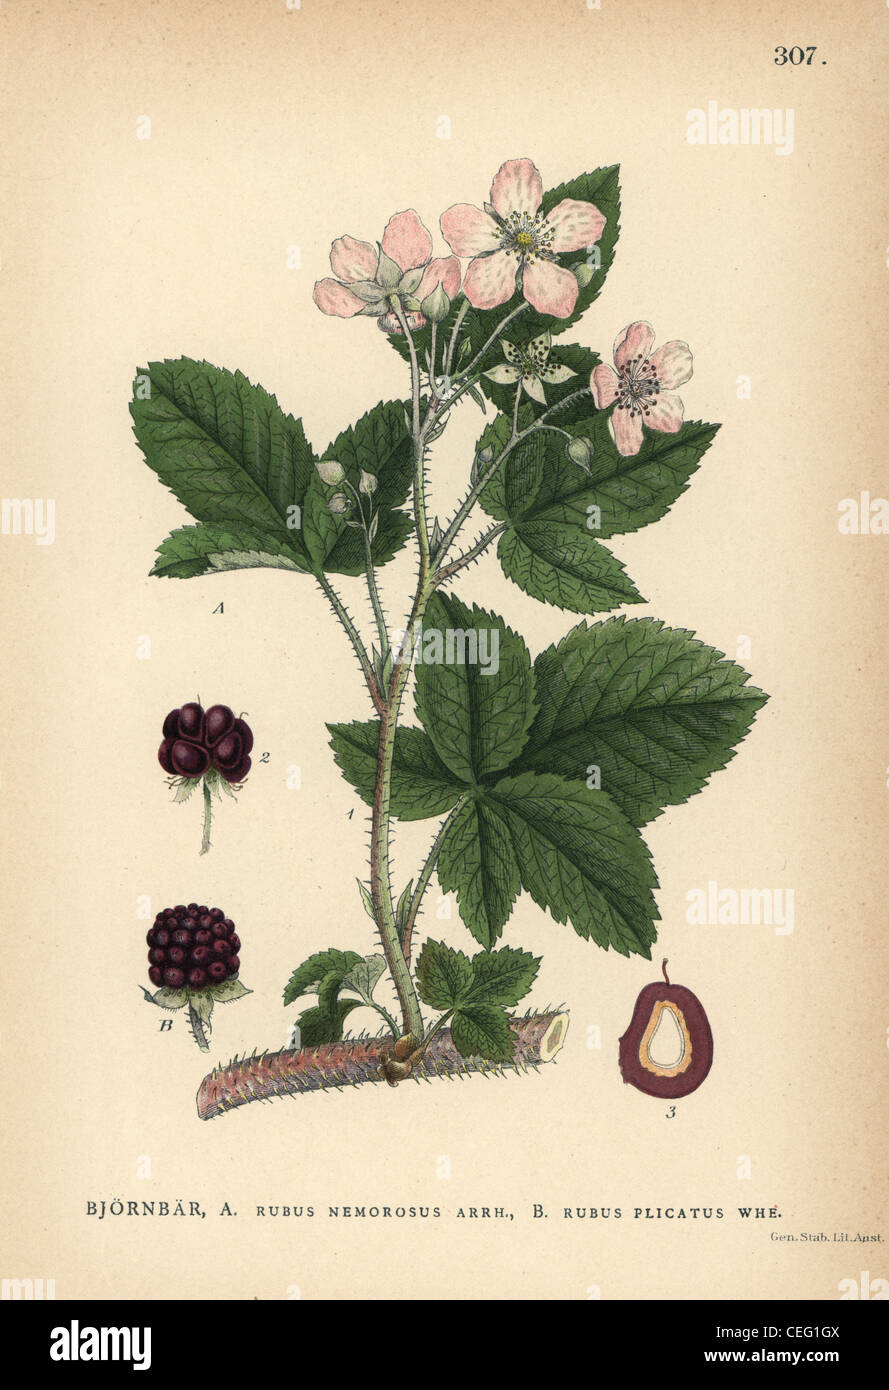 Blackberry bramble species, Rubus nemorosus and Rubus plicatus. Stock Photo